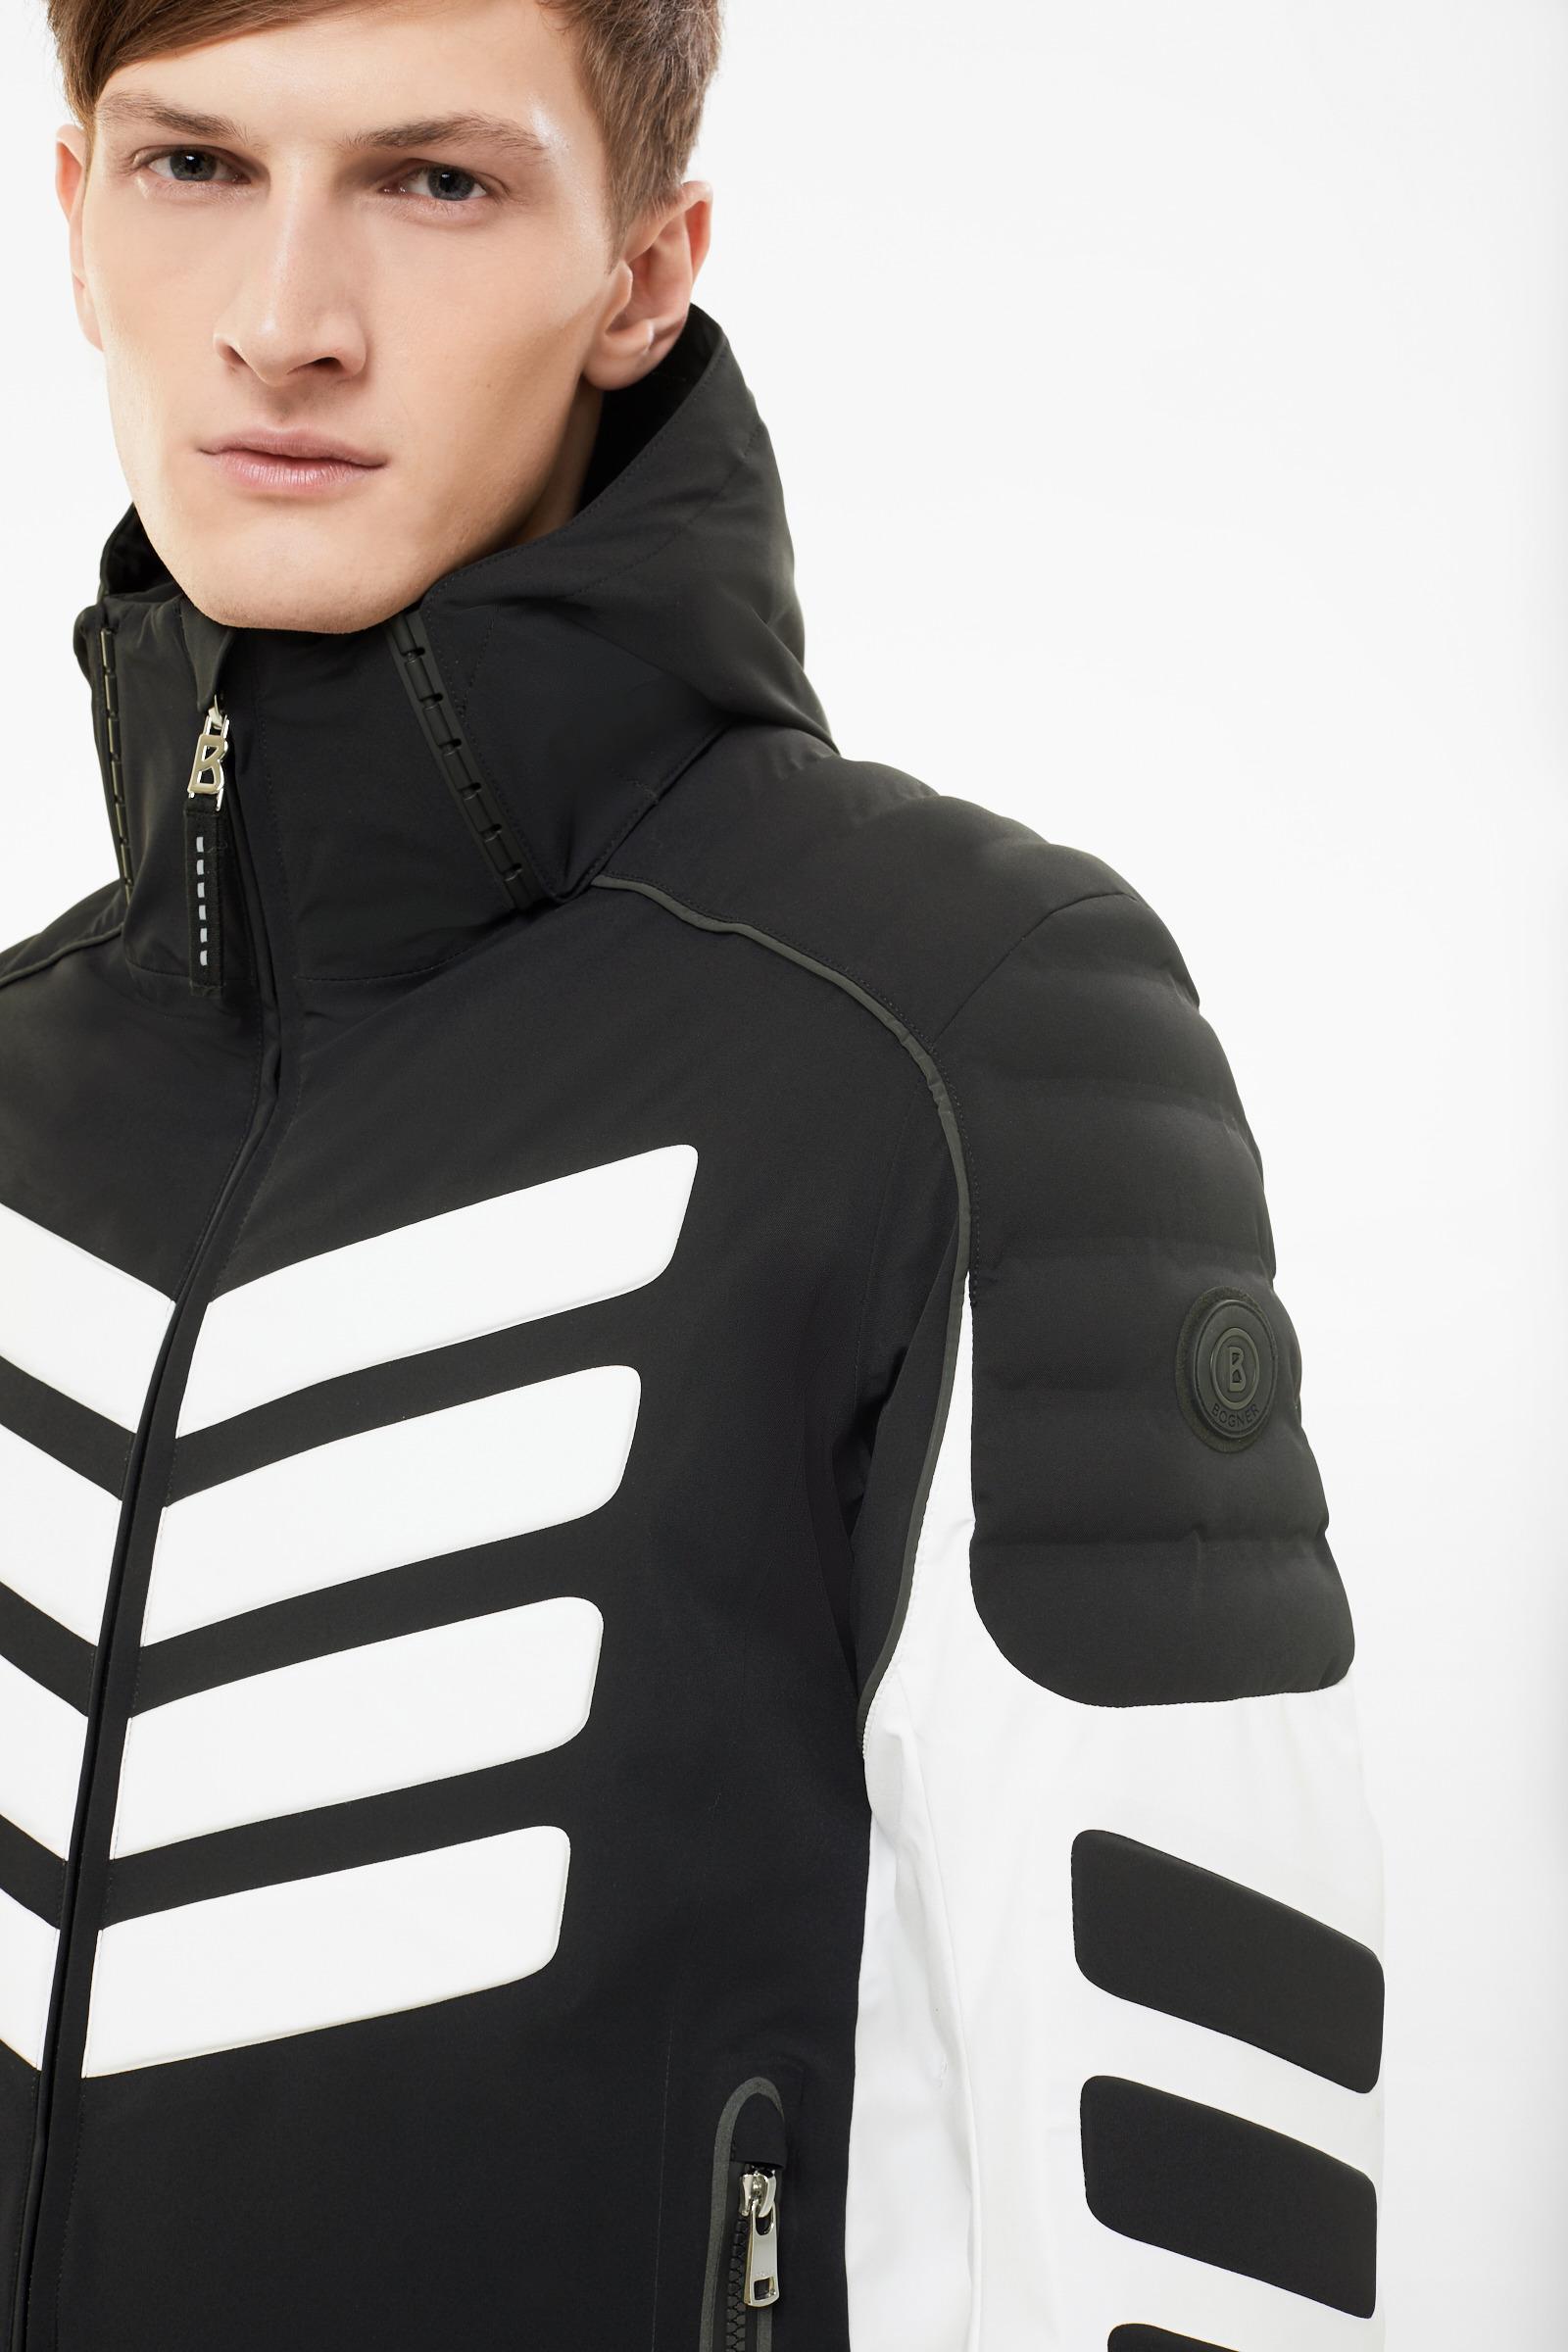 Bogner Synthetic Liam Ski Jacket In Black/white for Men - Lyst